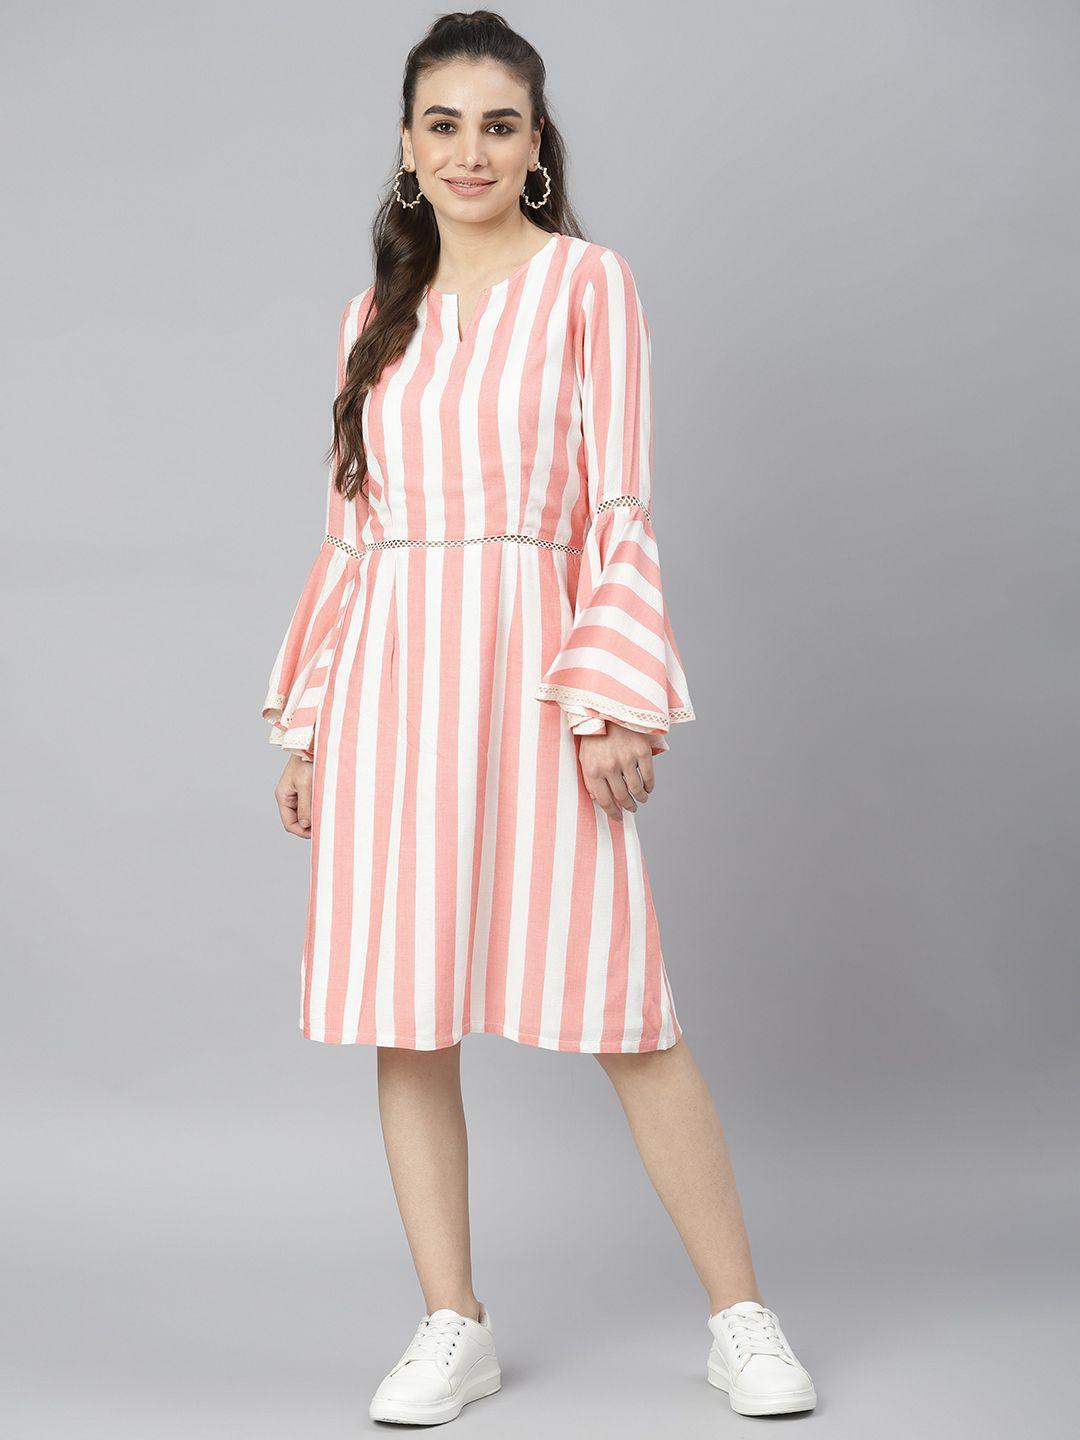 deebaco-pink-striped-bell-sleeved-a-line-dress